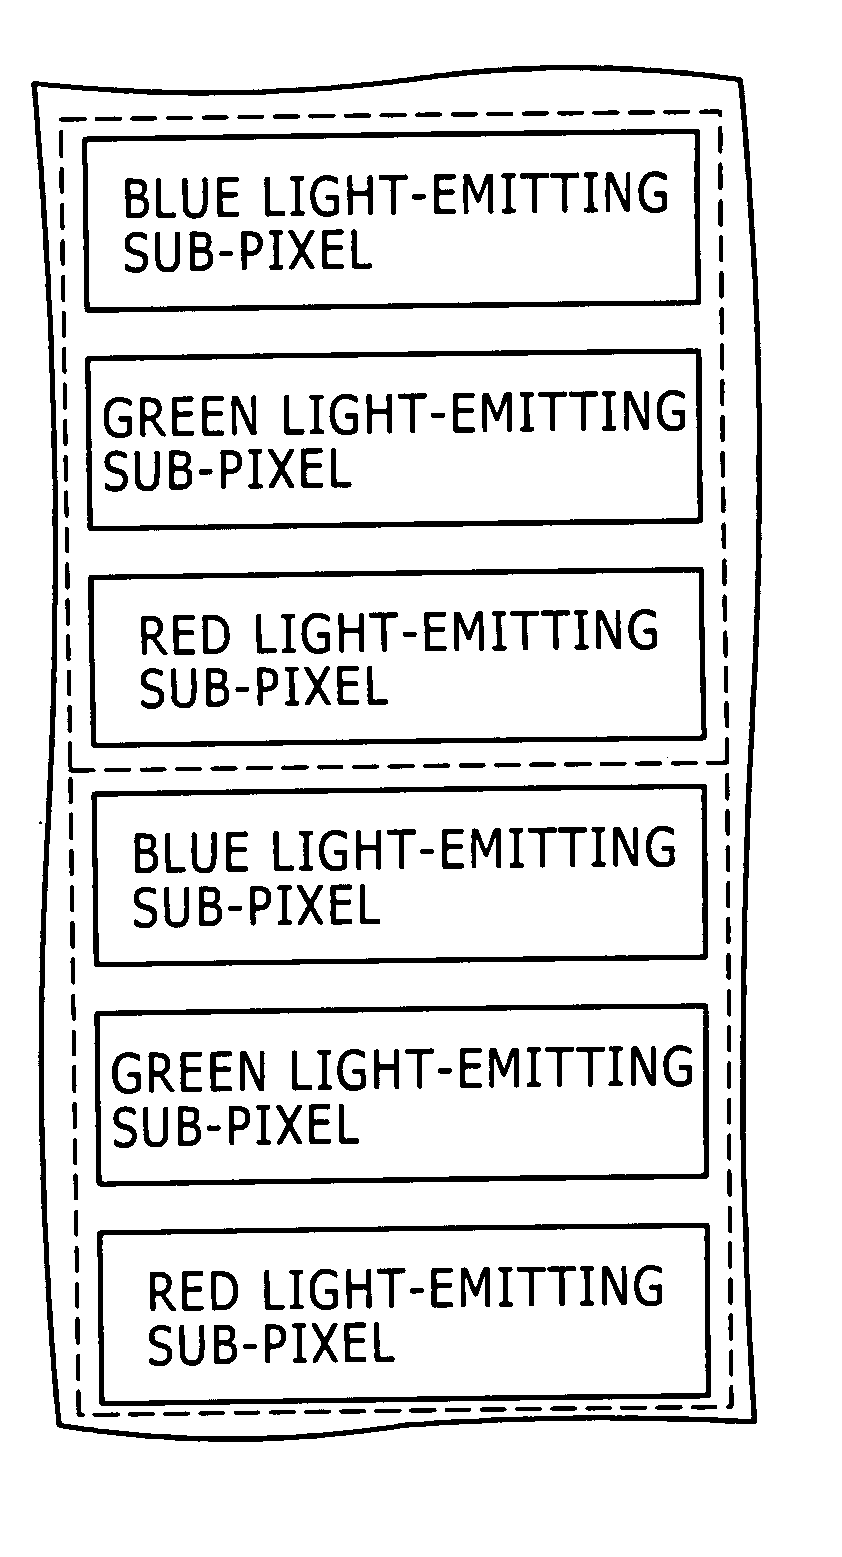 Organic electroluminescence display